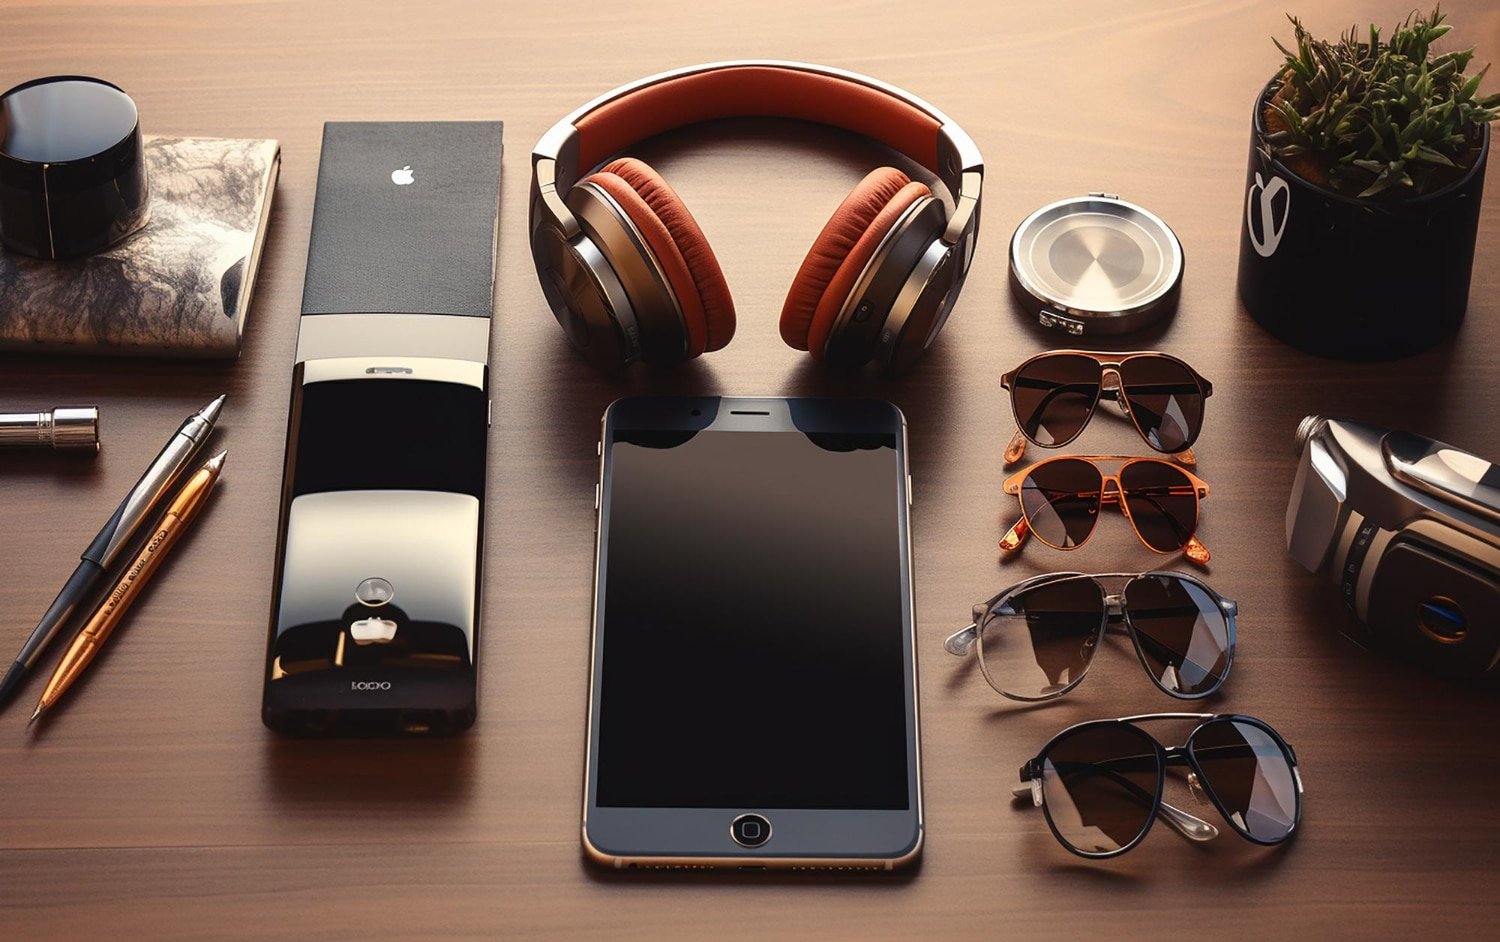 OnePlus Smartphones And Accessories